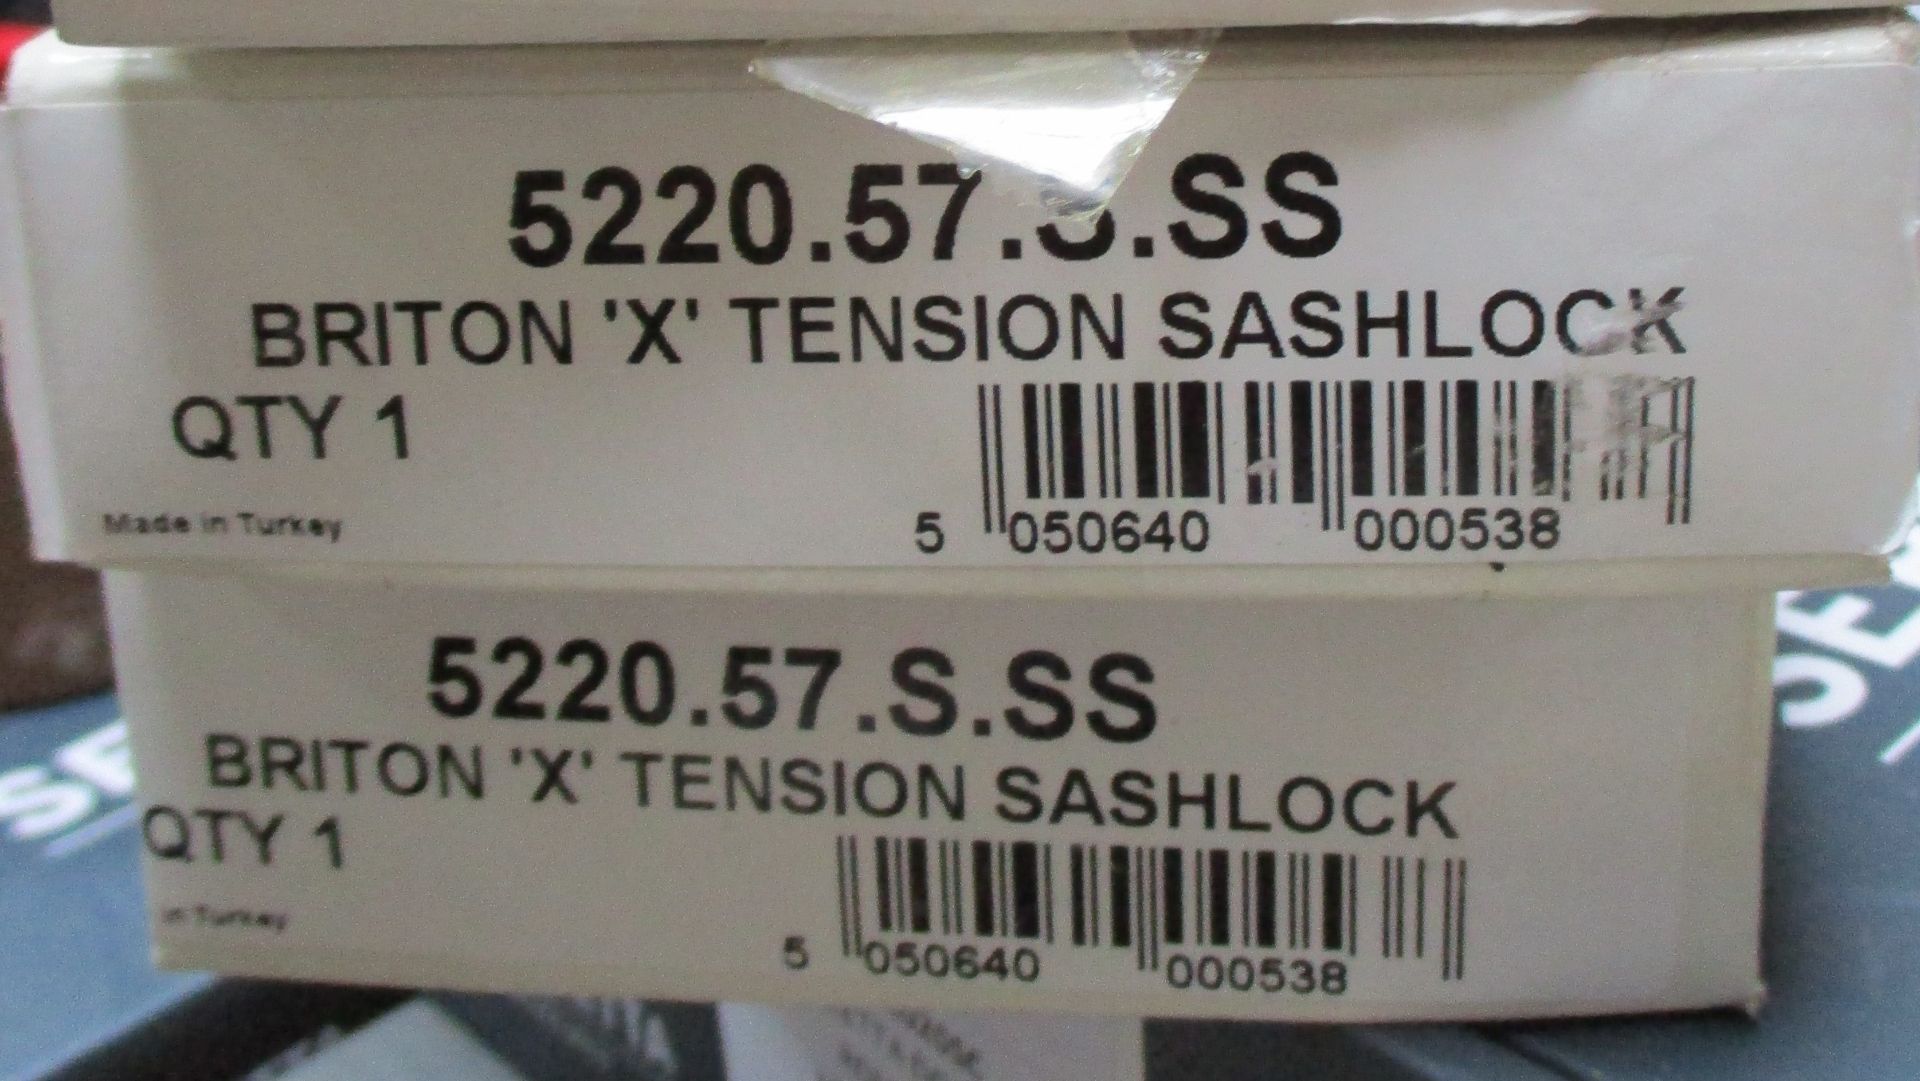 2 x Briton 'X' Tension Sashlock - Code: 5220.57.S.SS - Brand New Stock - Location: Peterlee, SR8 - Image 2 of 3